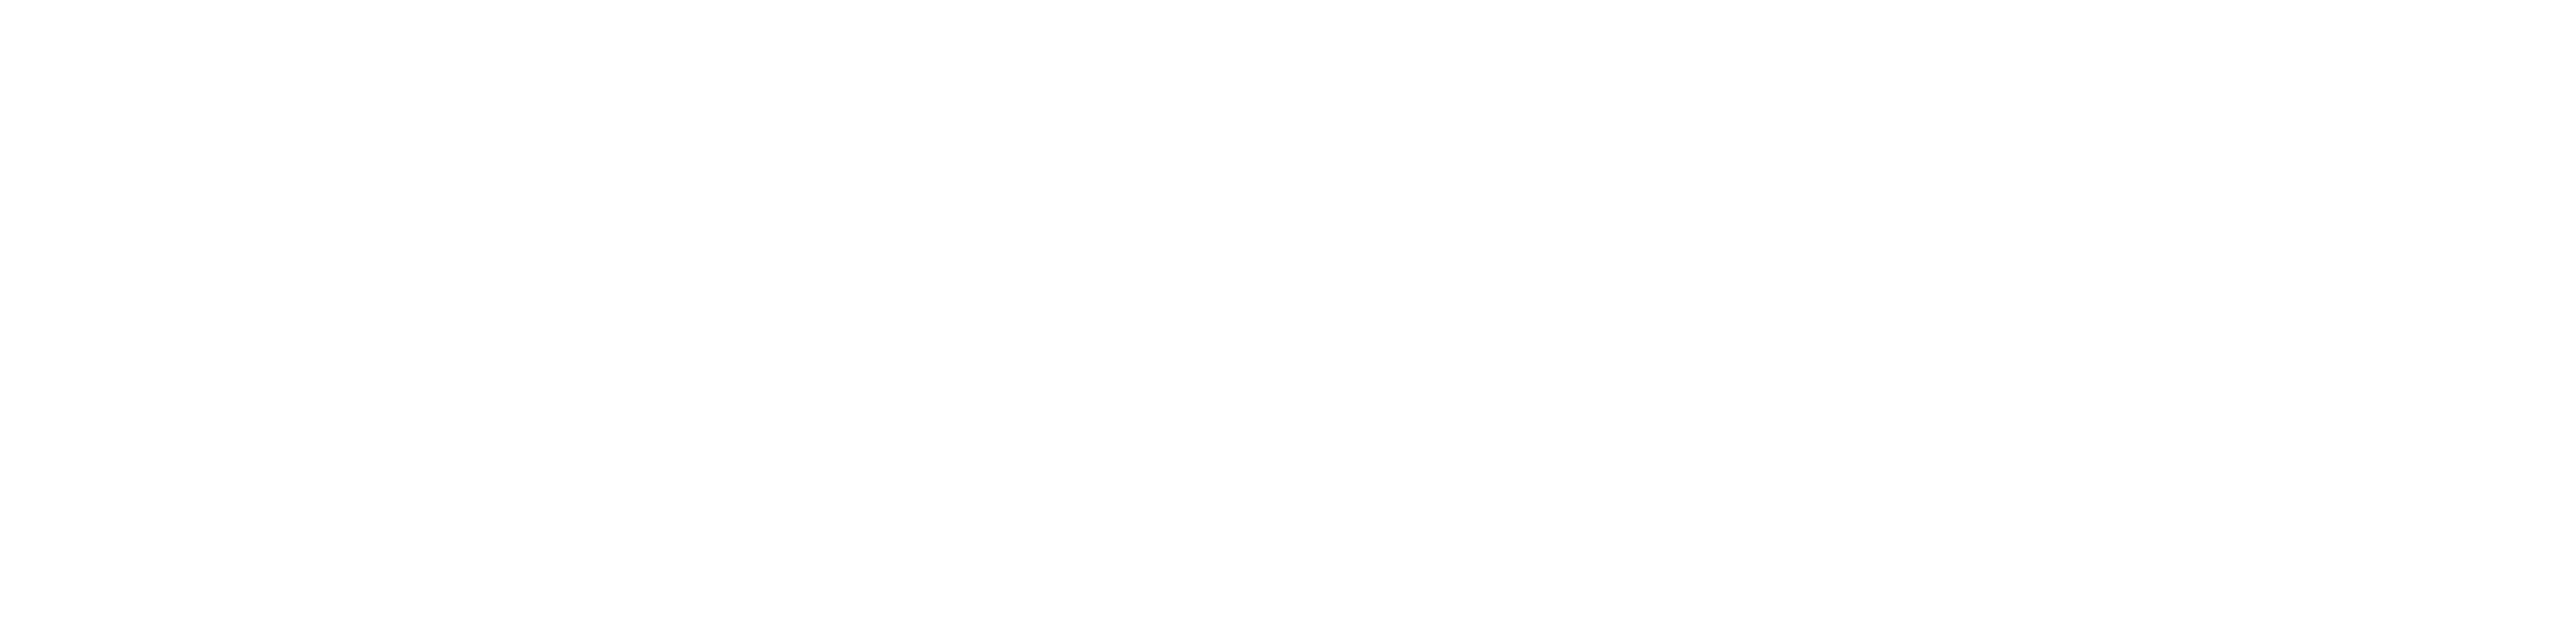 EXCEL logo homepage banner